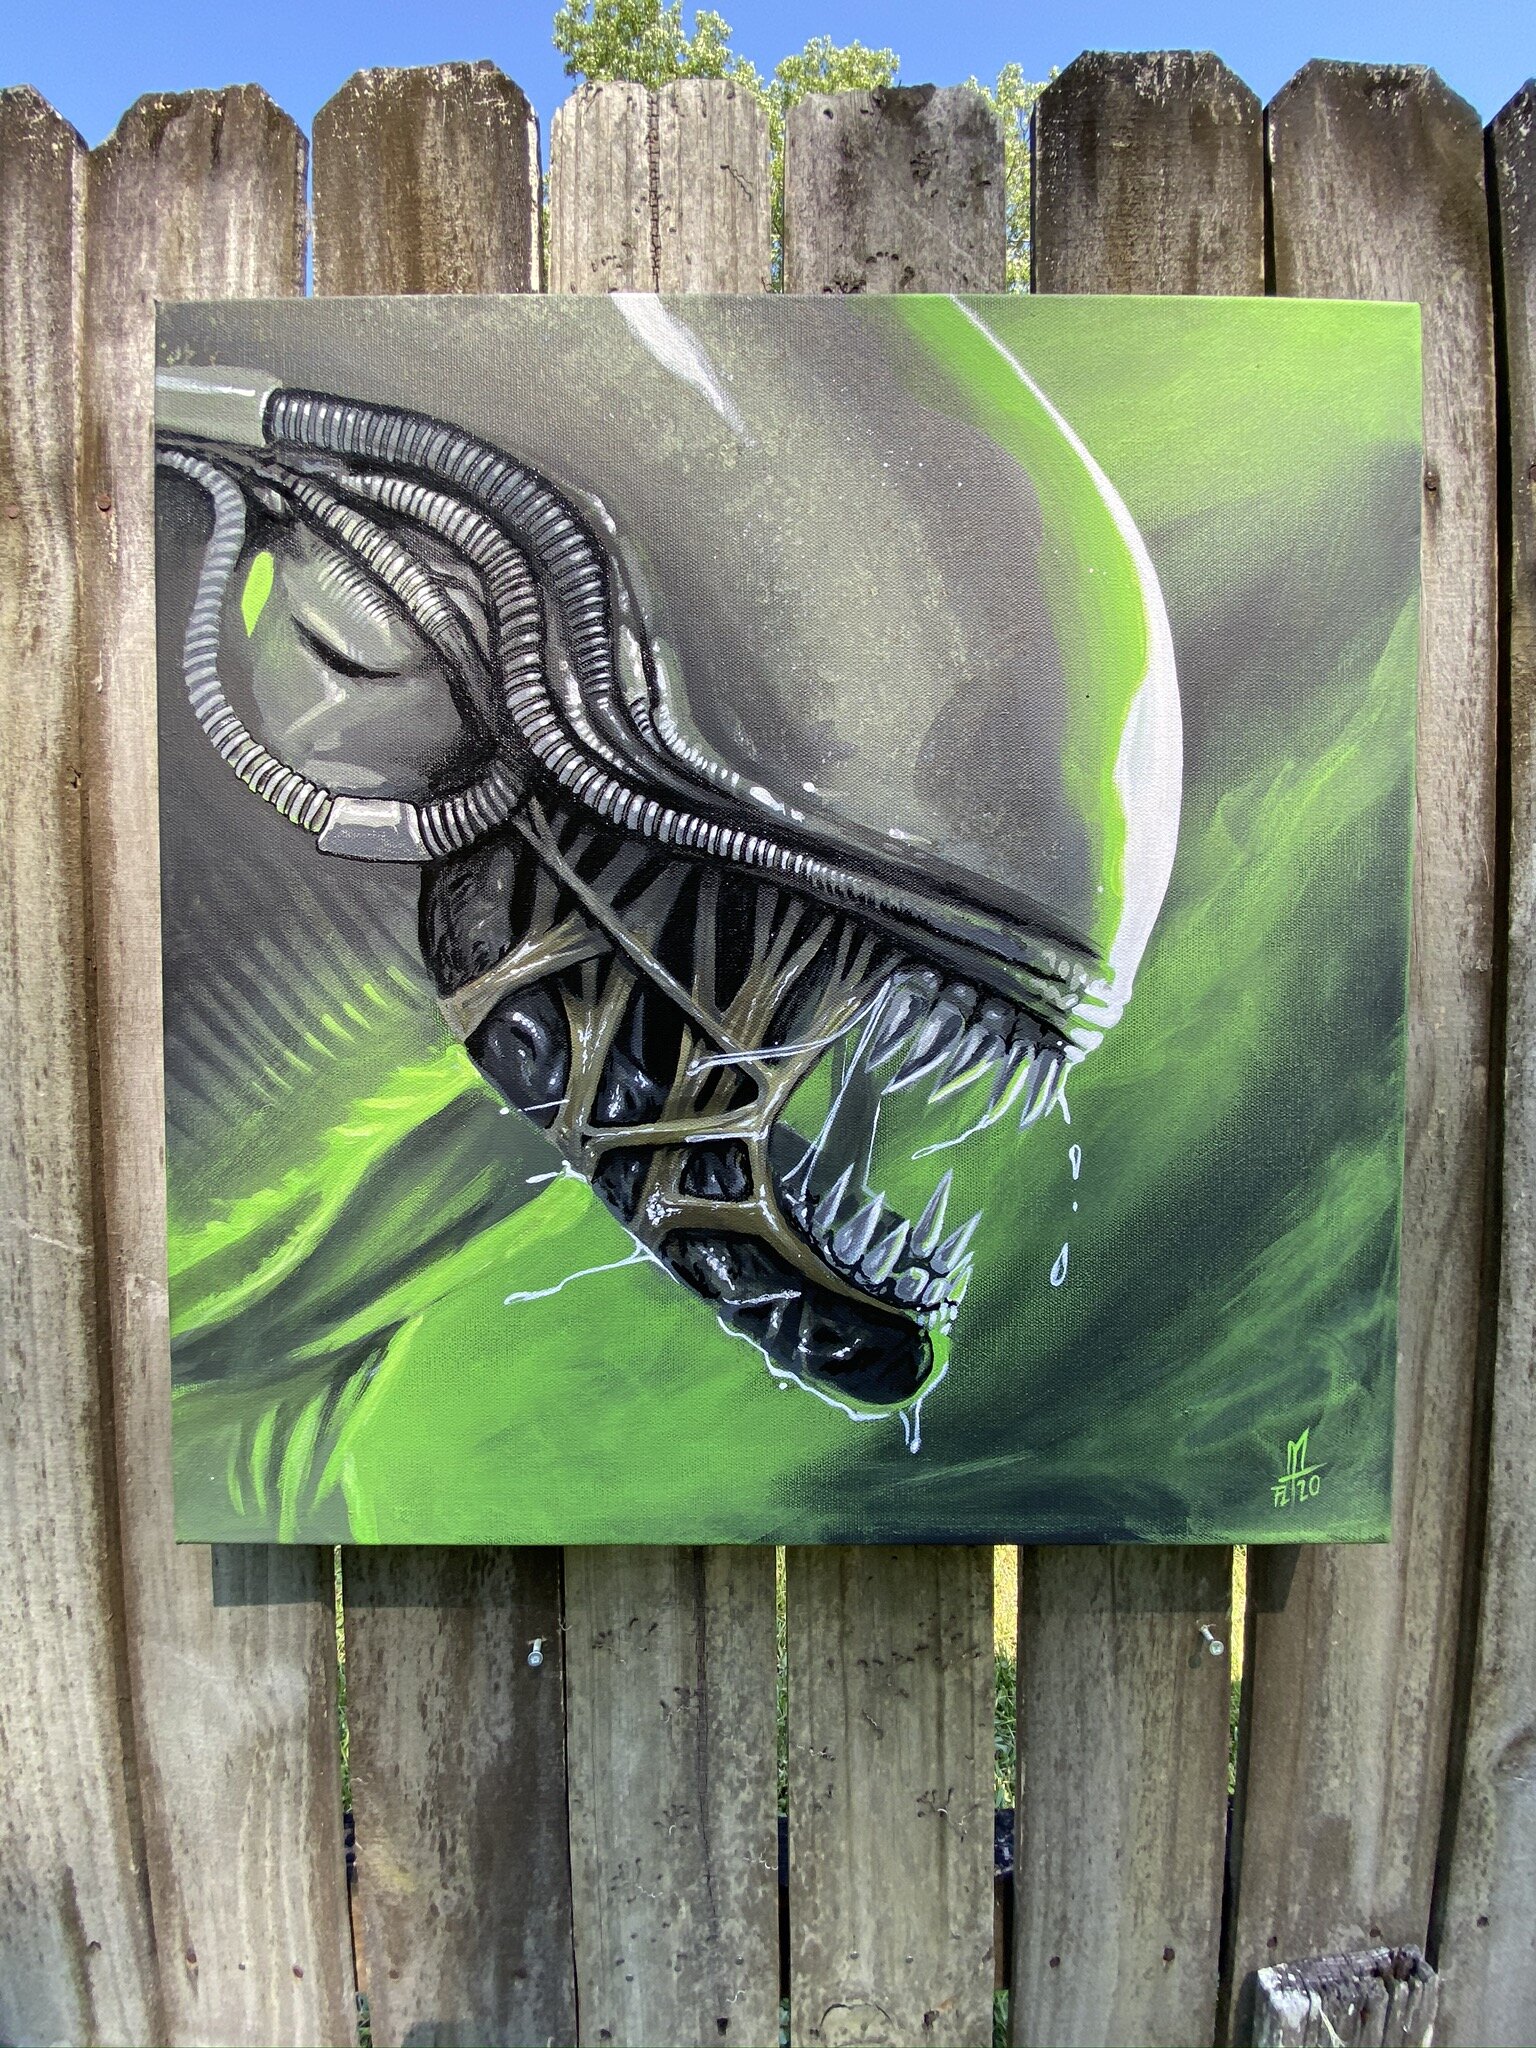 Alien Original Acrylic Painting